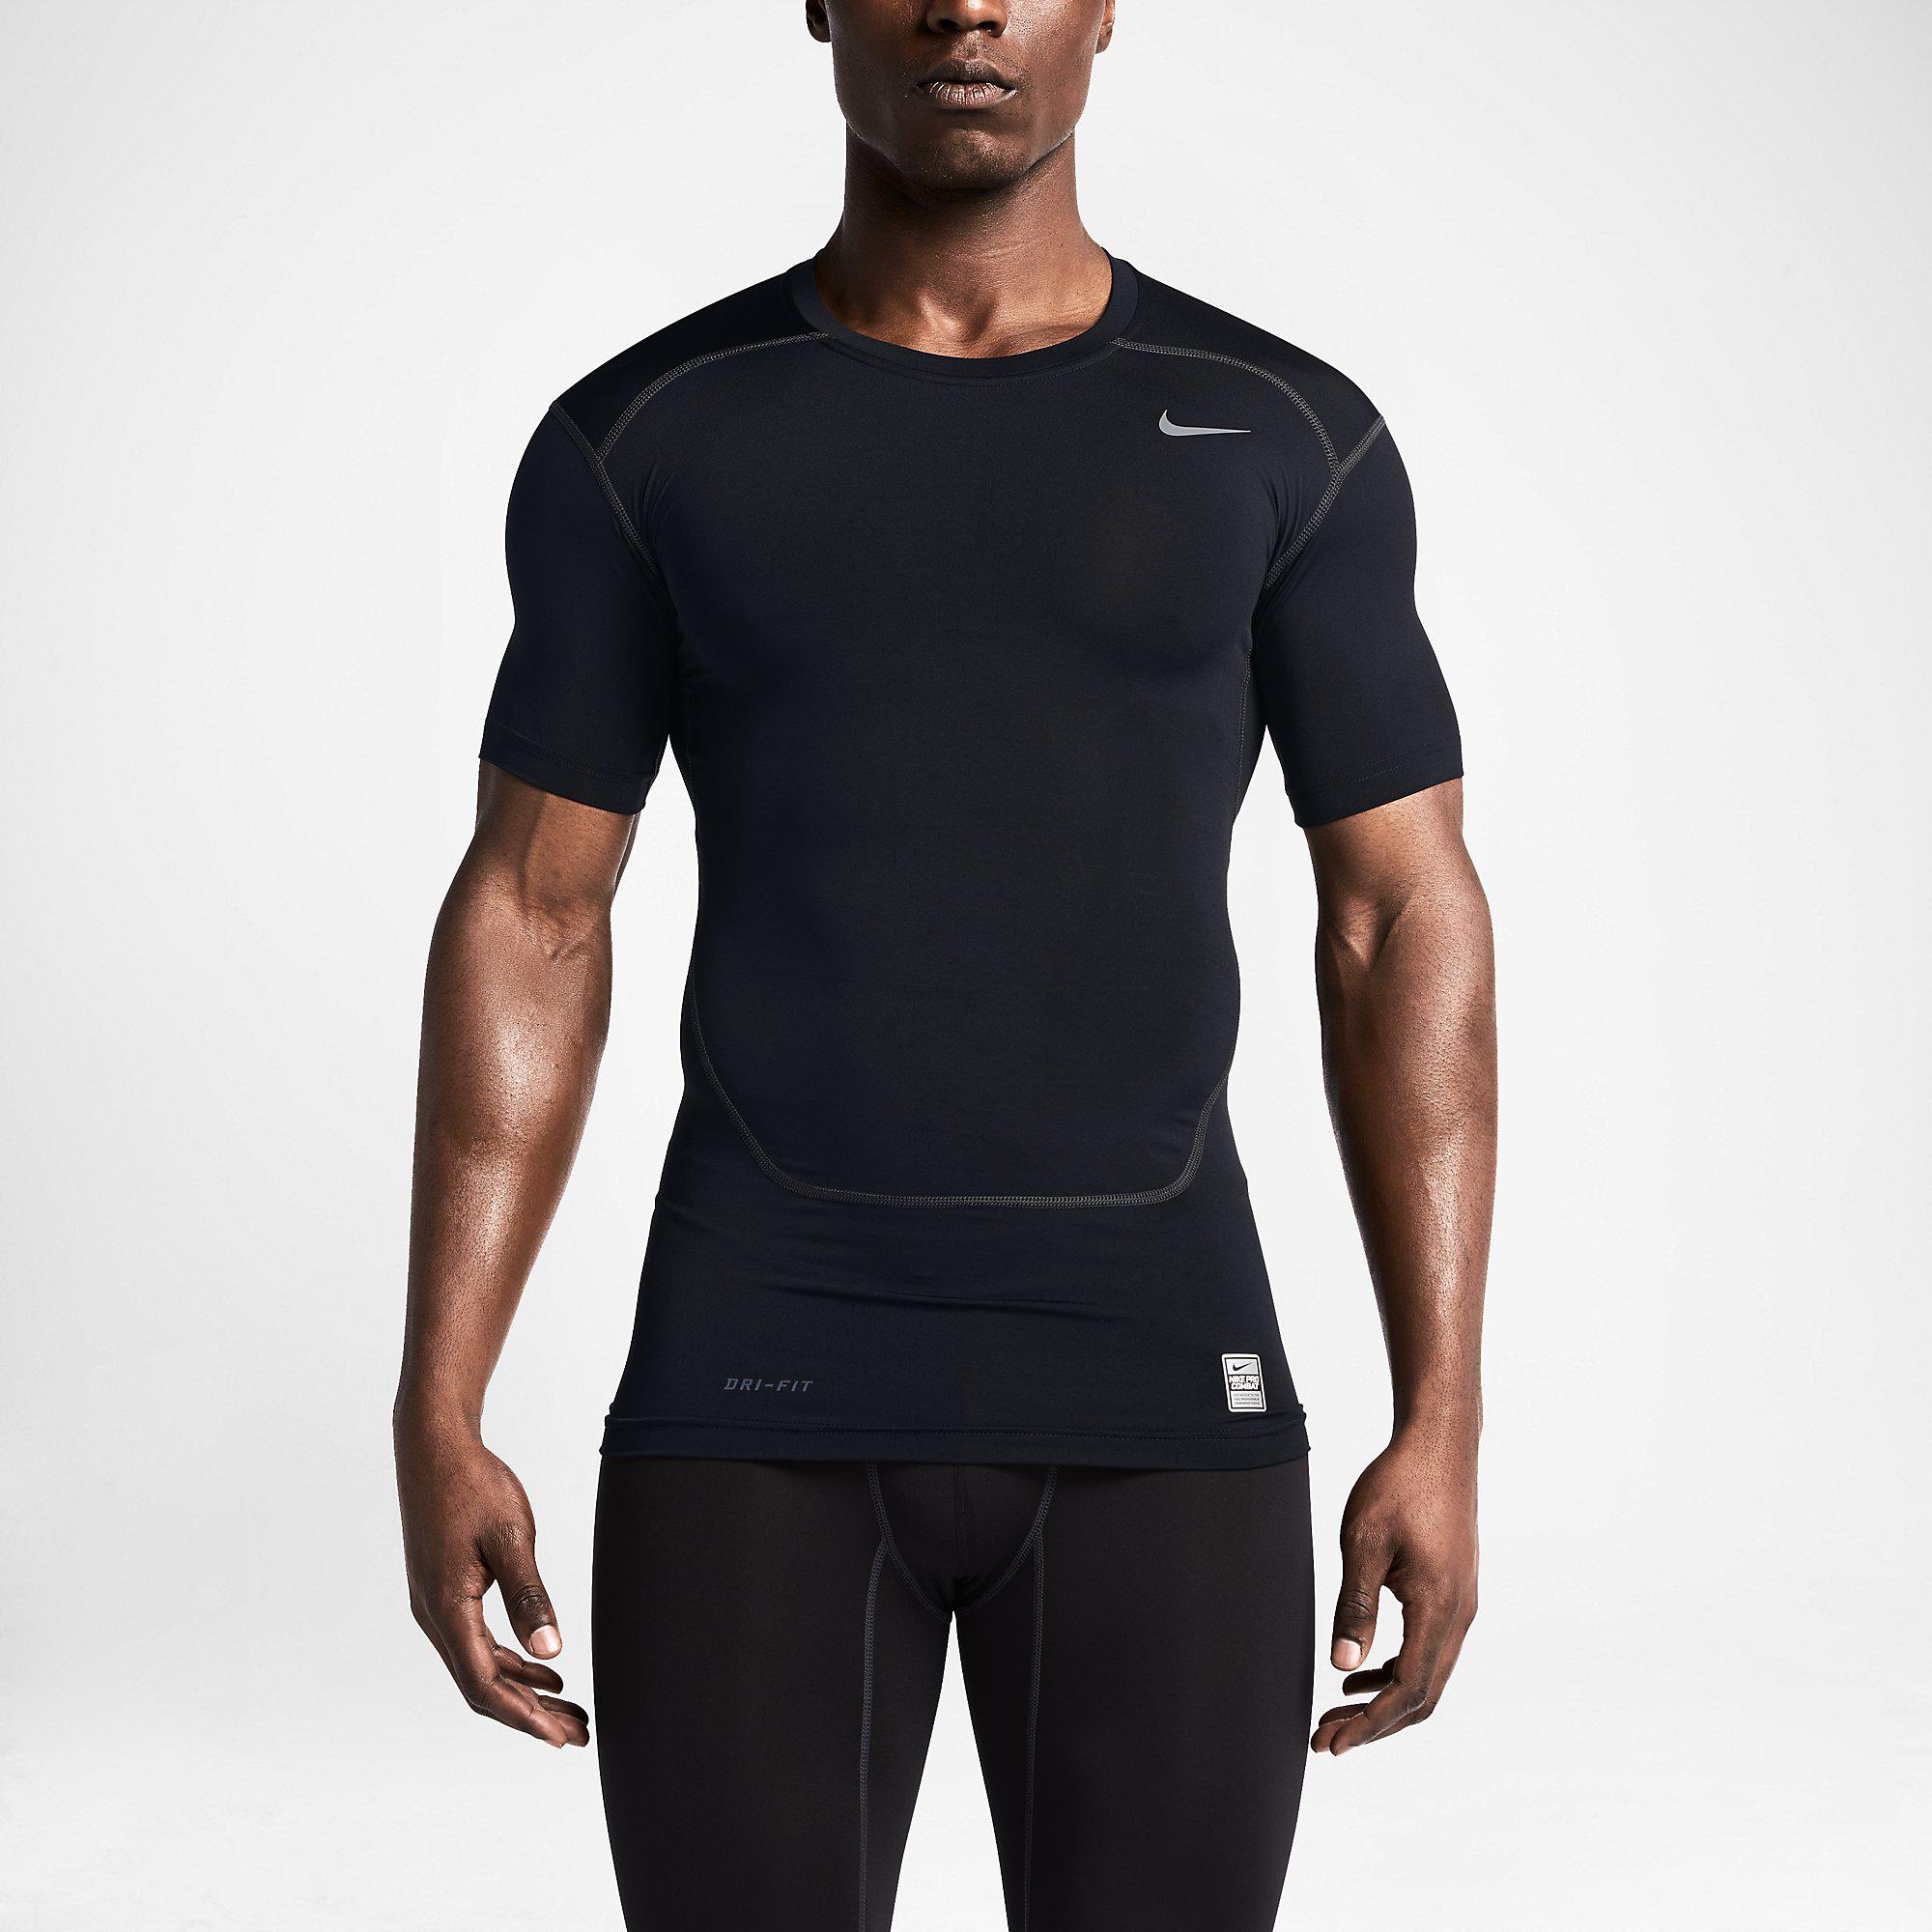 Nike Pro 2.0 Combat Core Short Sleeve Shirt - Black/Cool Grey